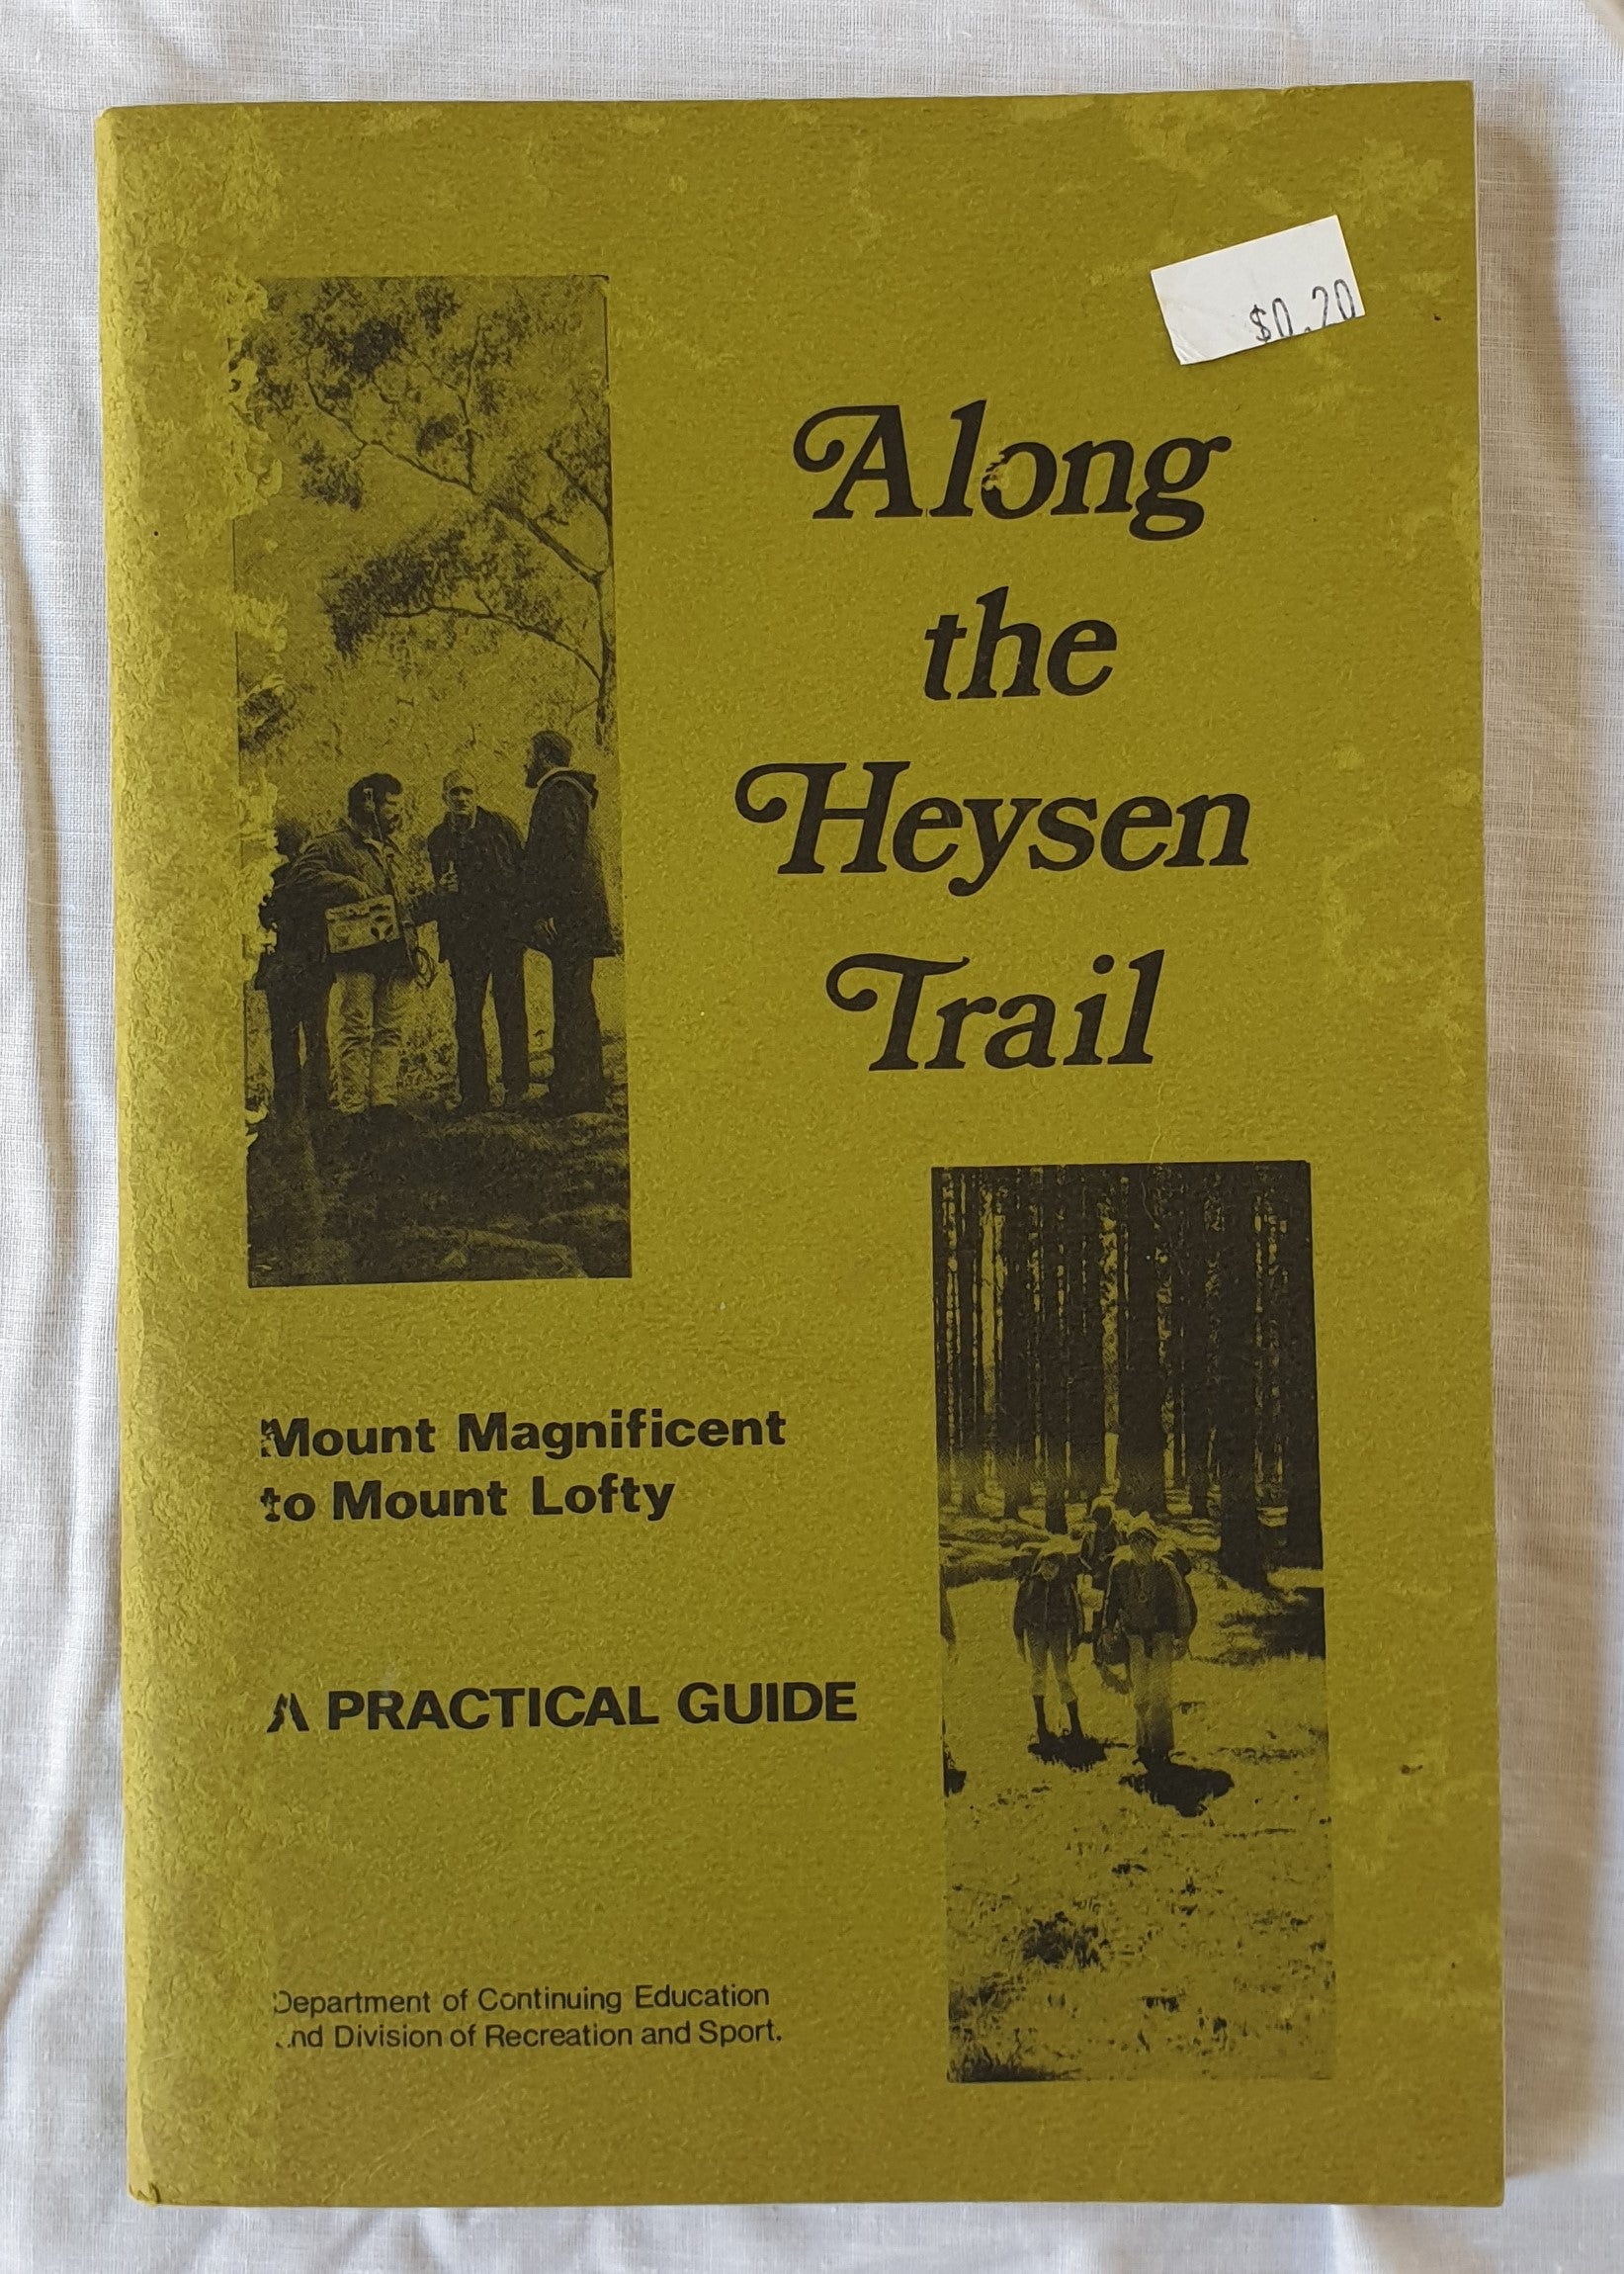 Along the Heysen Trail by David Corbett and Derek Whitelock